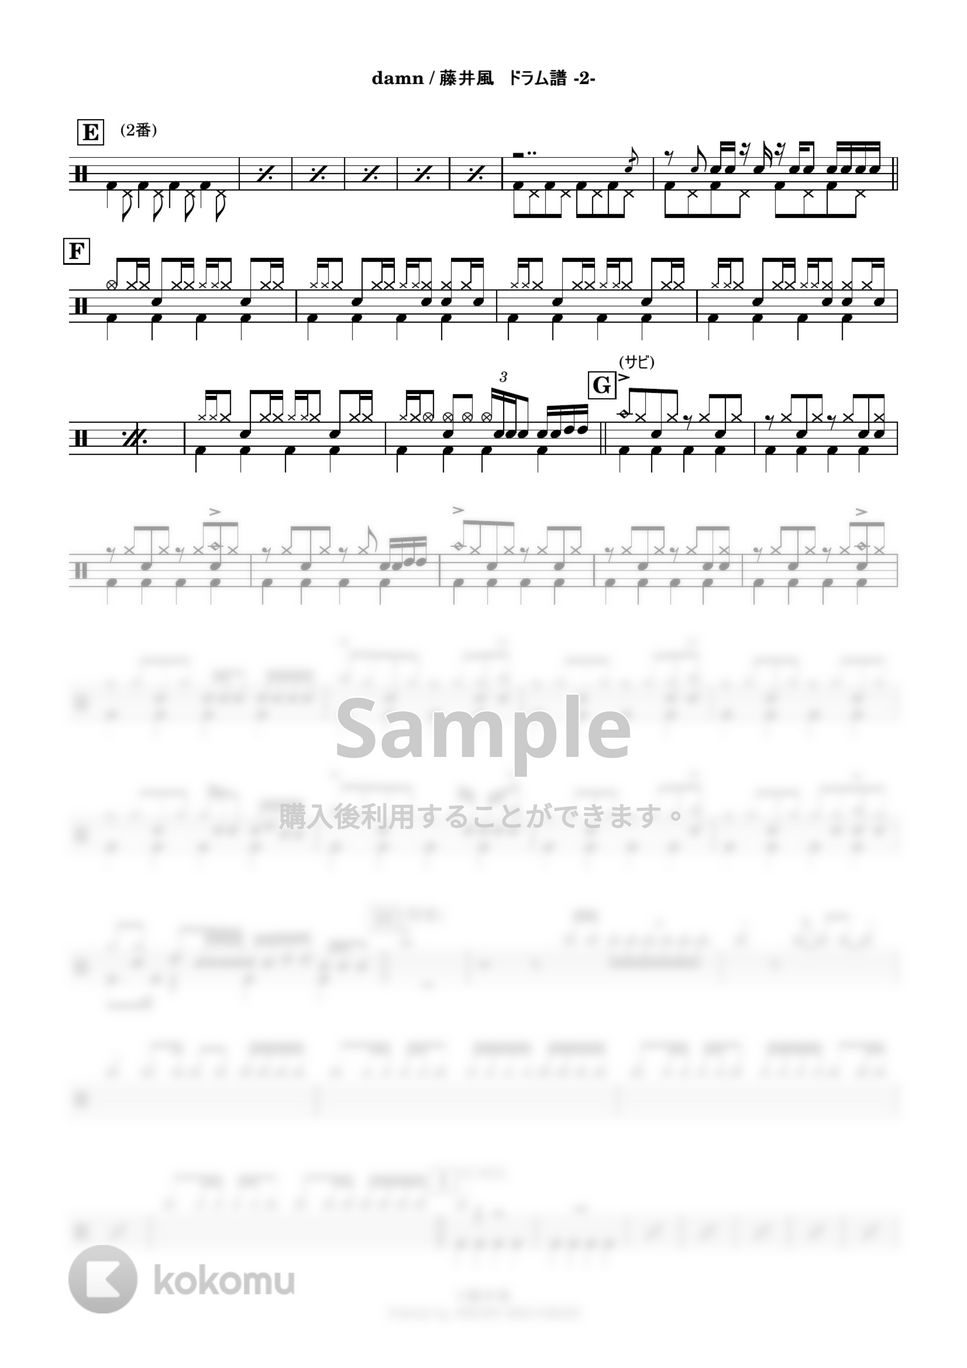 藤井風 - damn (ドラム譜MIDI付) by 鈴木建作